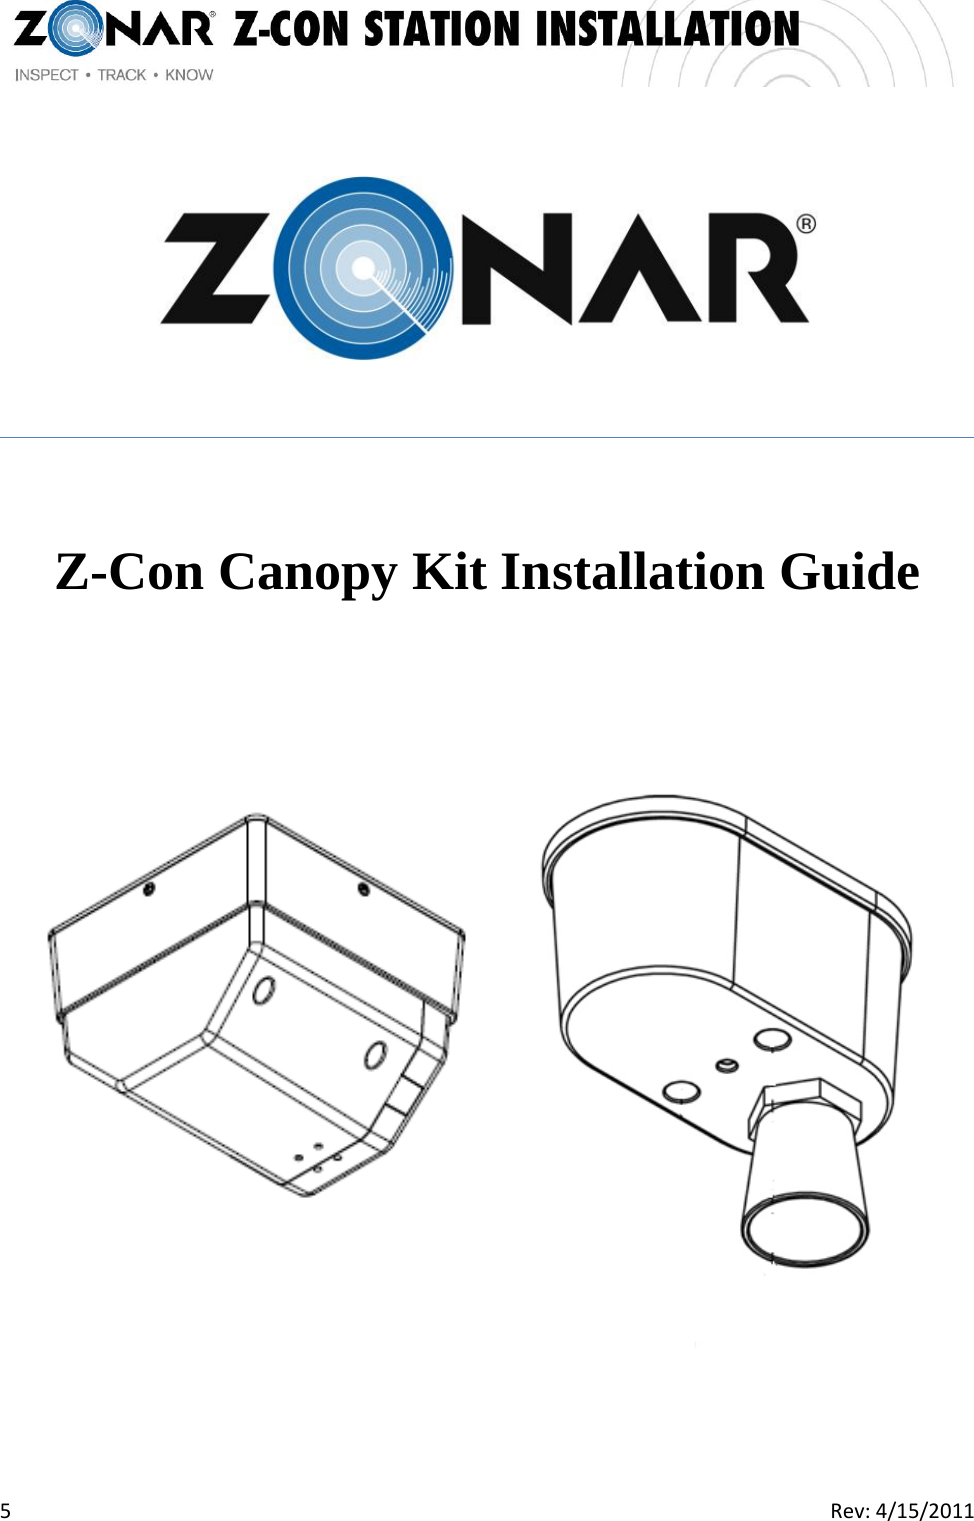   5  Rev:4/15/2011     Z-Con Canopy Kit Installation Guide   